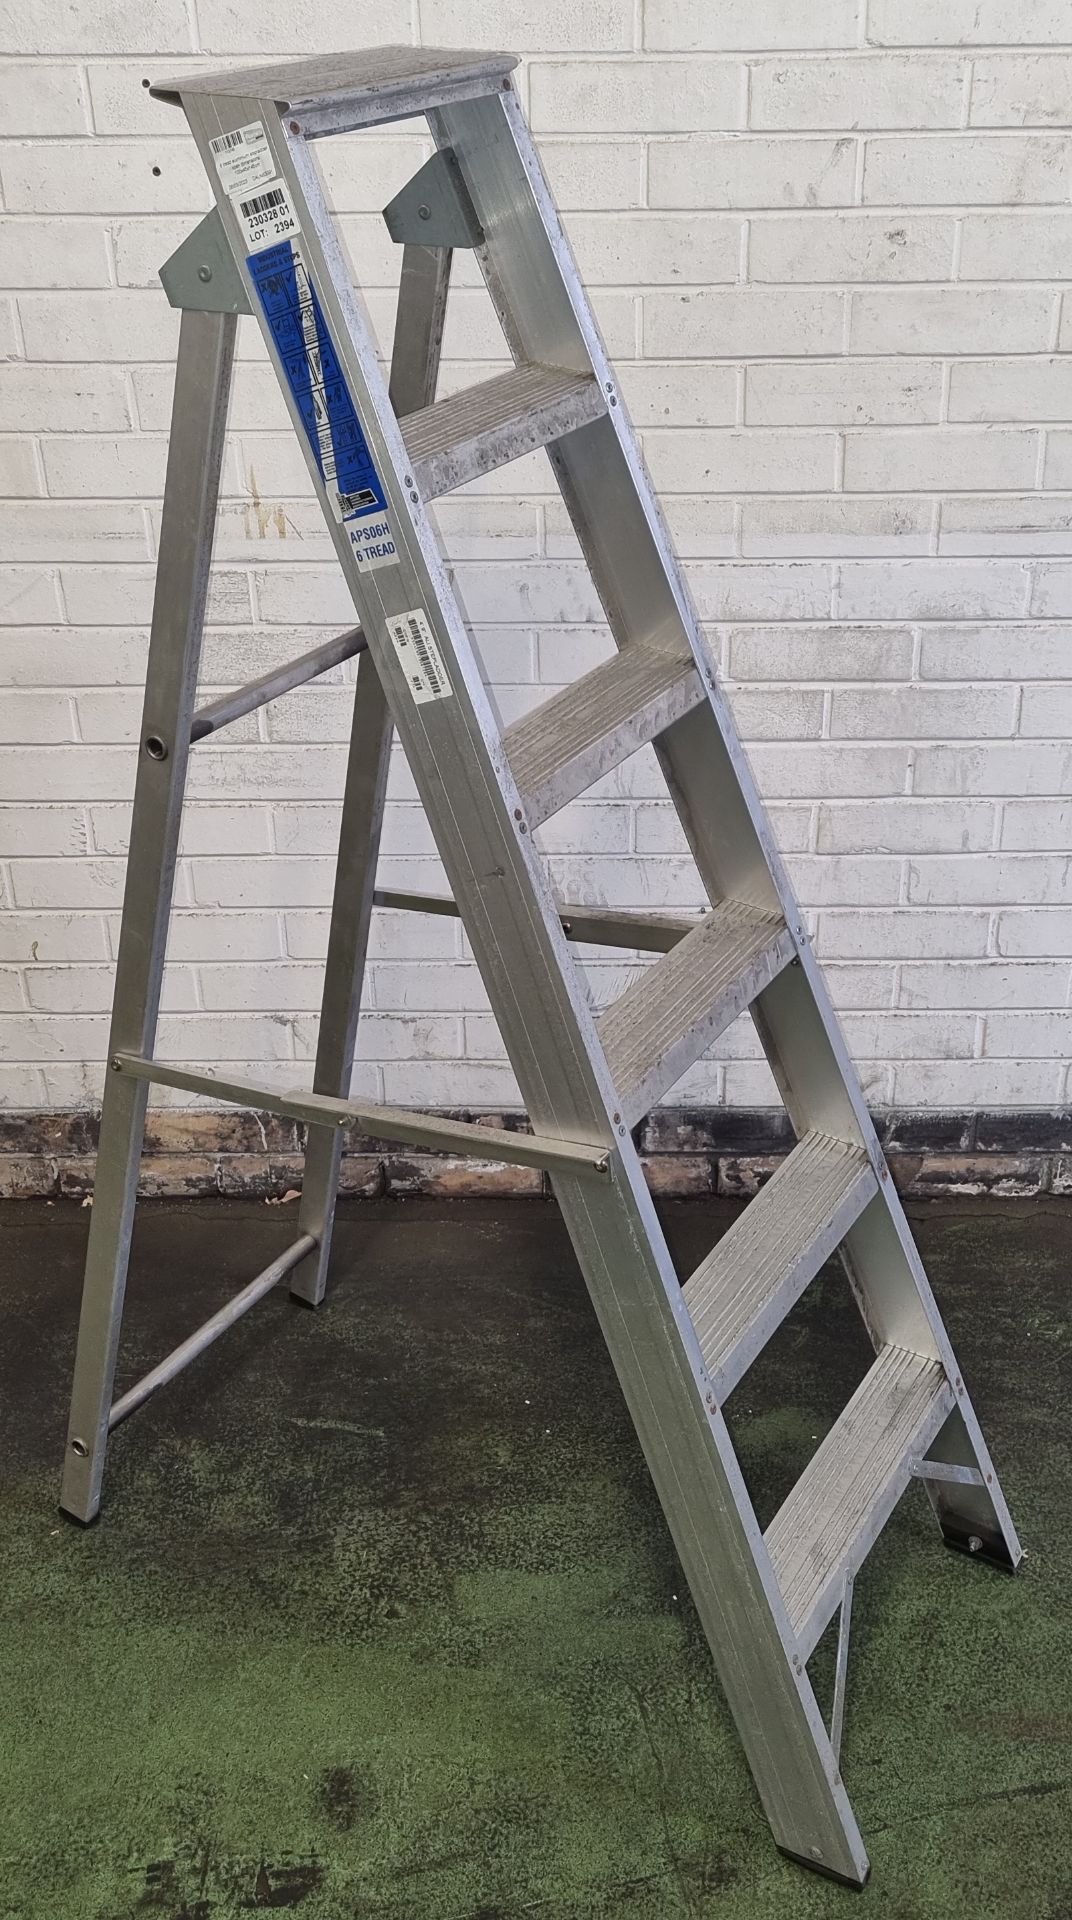 6 tread aluminium step ladder - open dimensions 100 x 45 x 145cm - Image 2 of 2